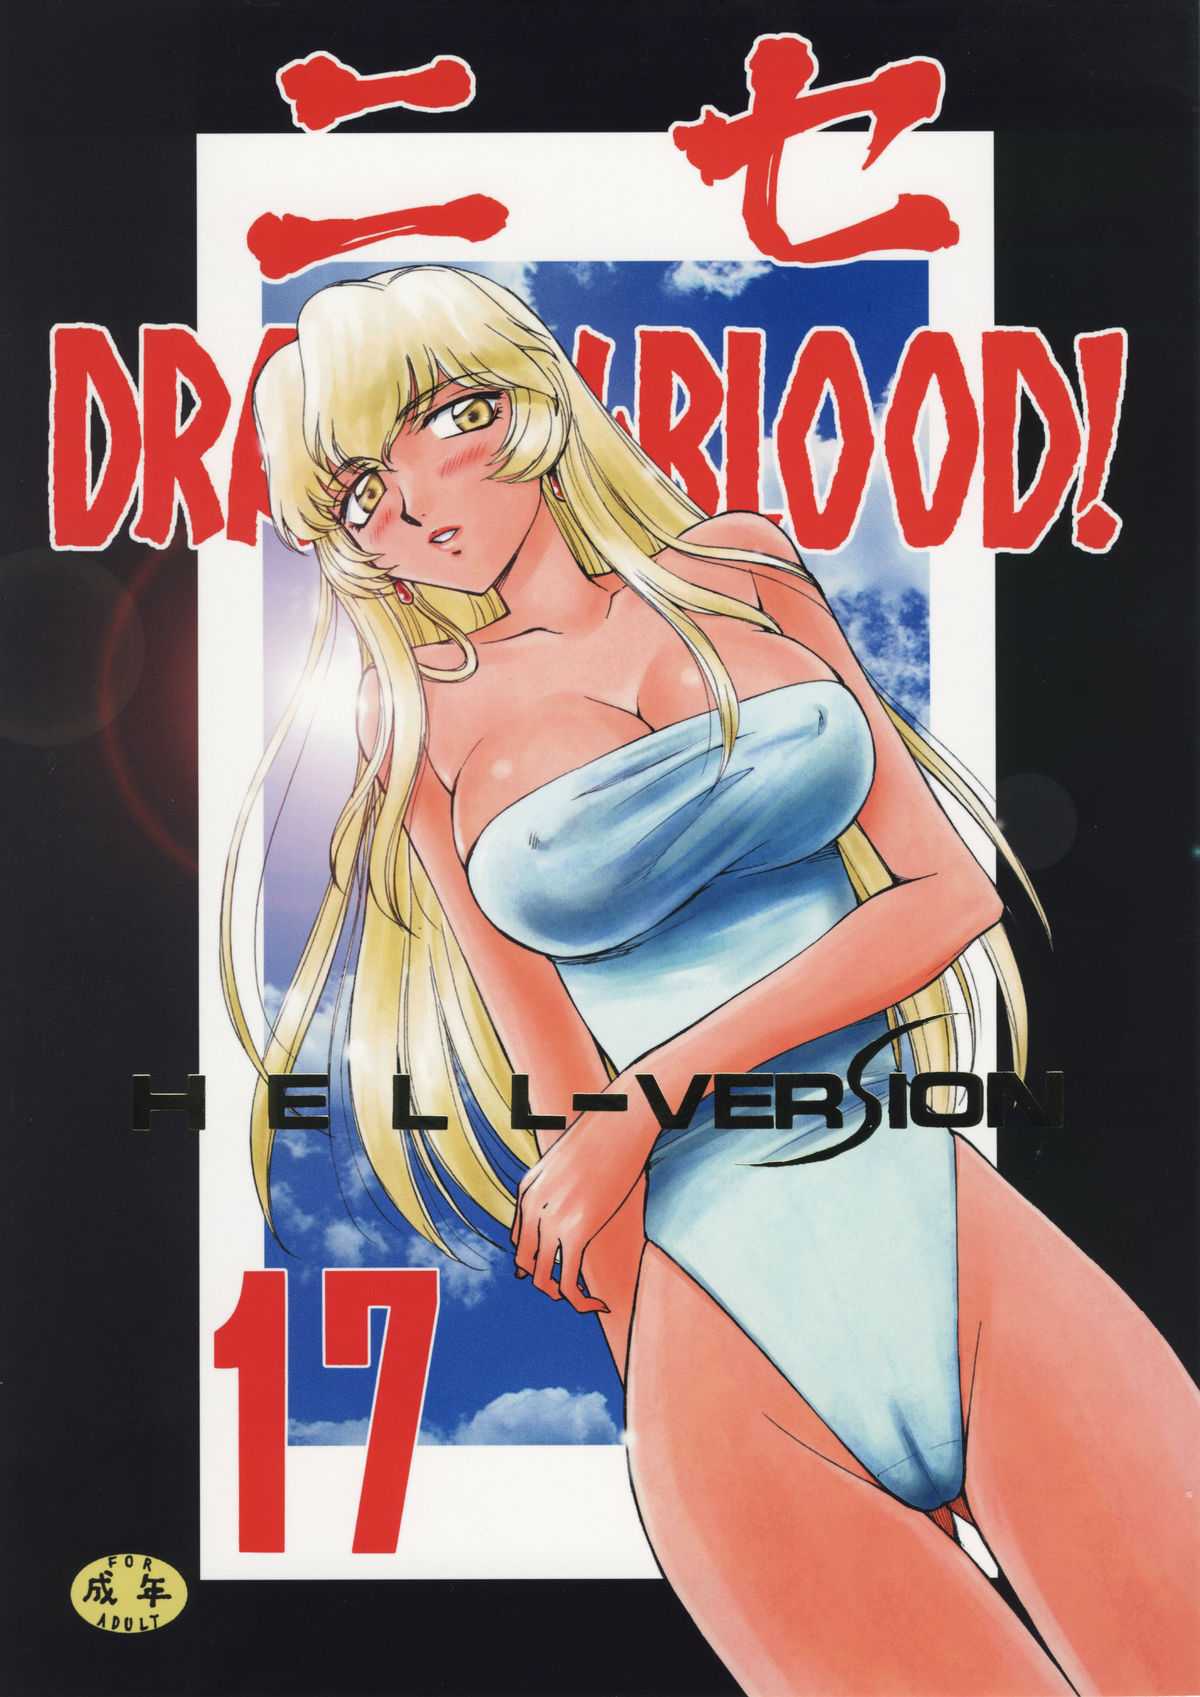 [LTM (Taira Hajime)] Nise Dragon Blood 17 (C76) (C76) [LTM(たいらはじめ)] ニセ DRAGON・BLOOD！17